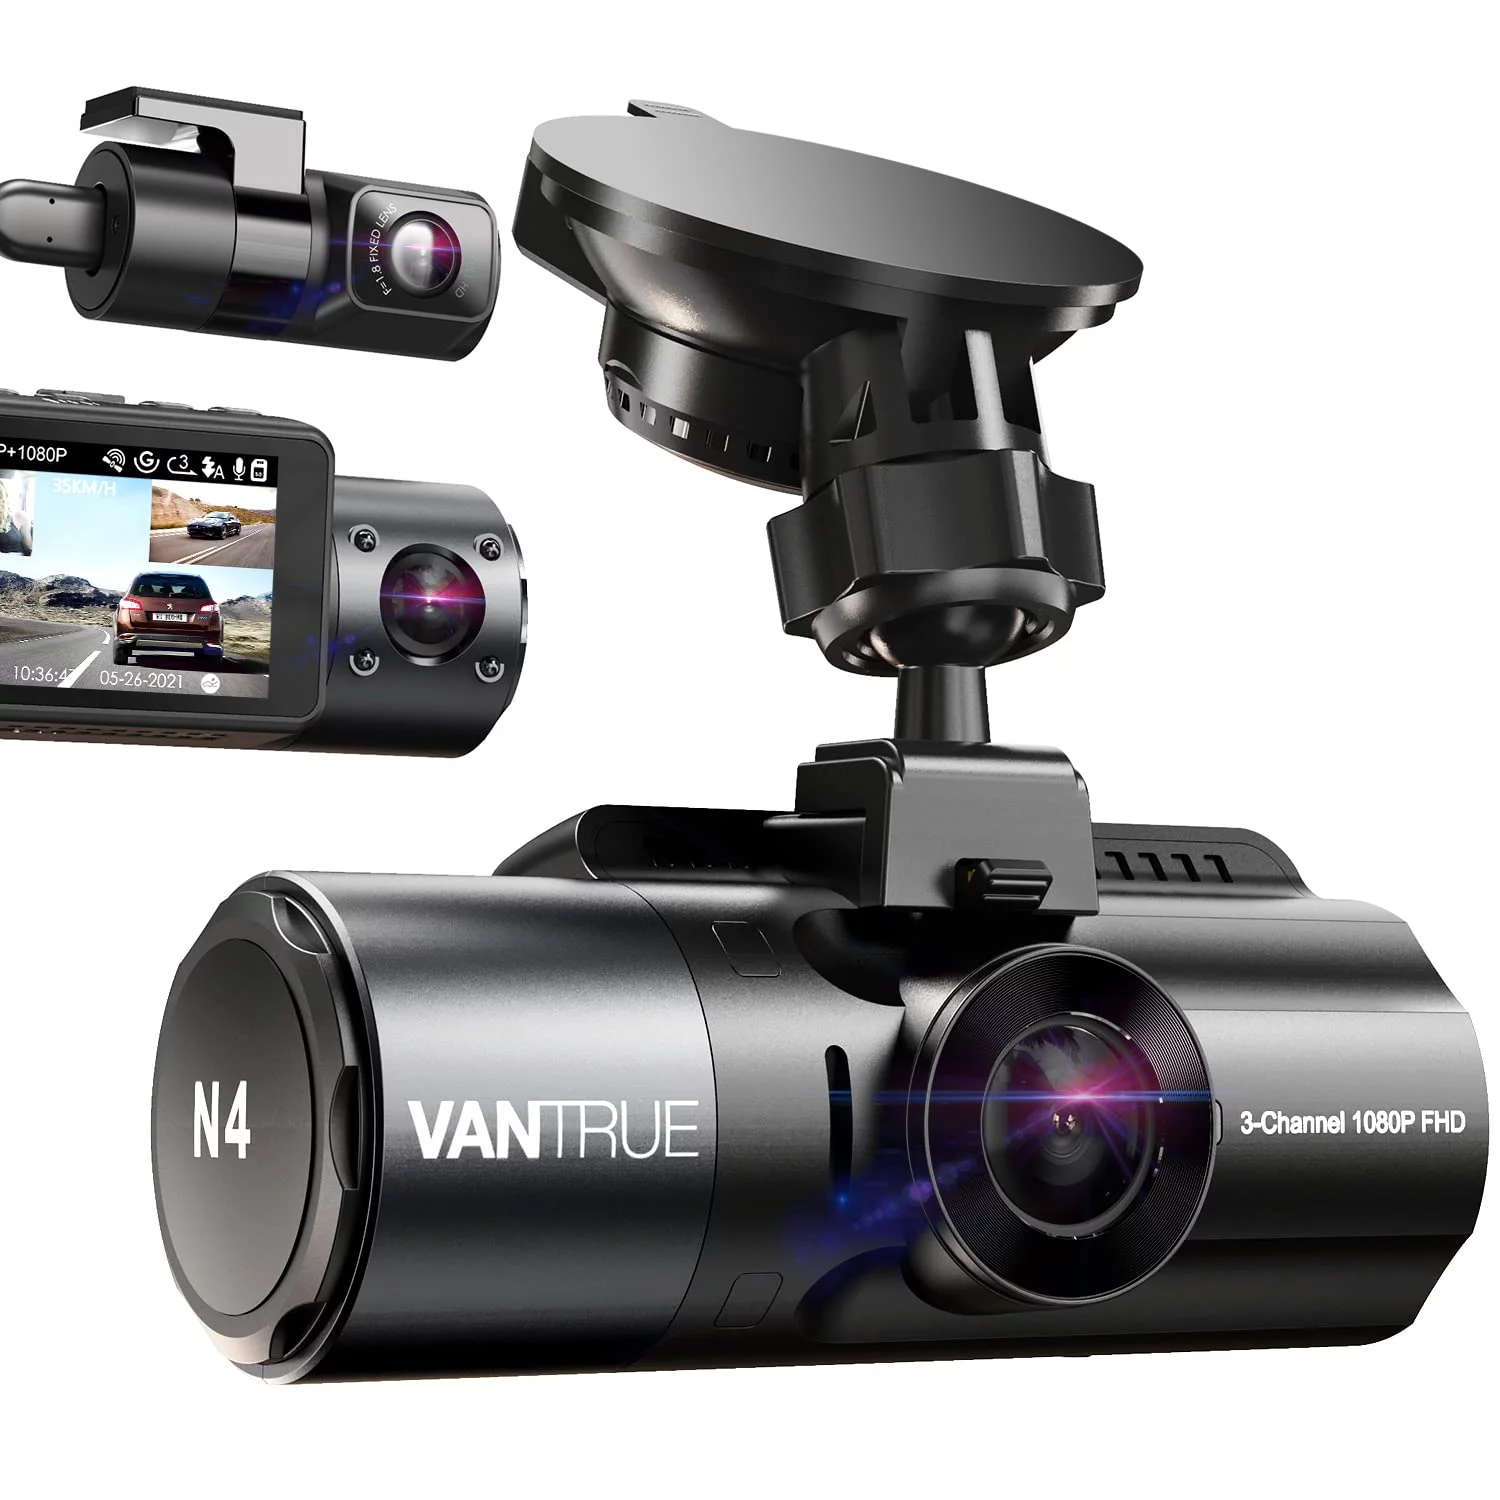 Vantrue N4 - Best Dual Dashcam